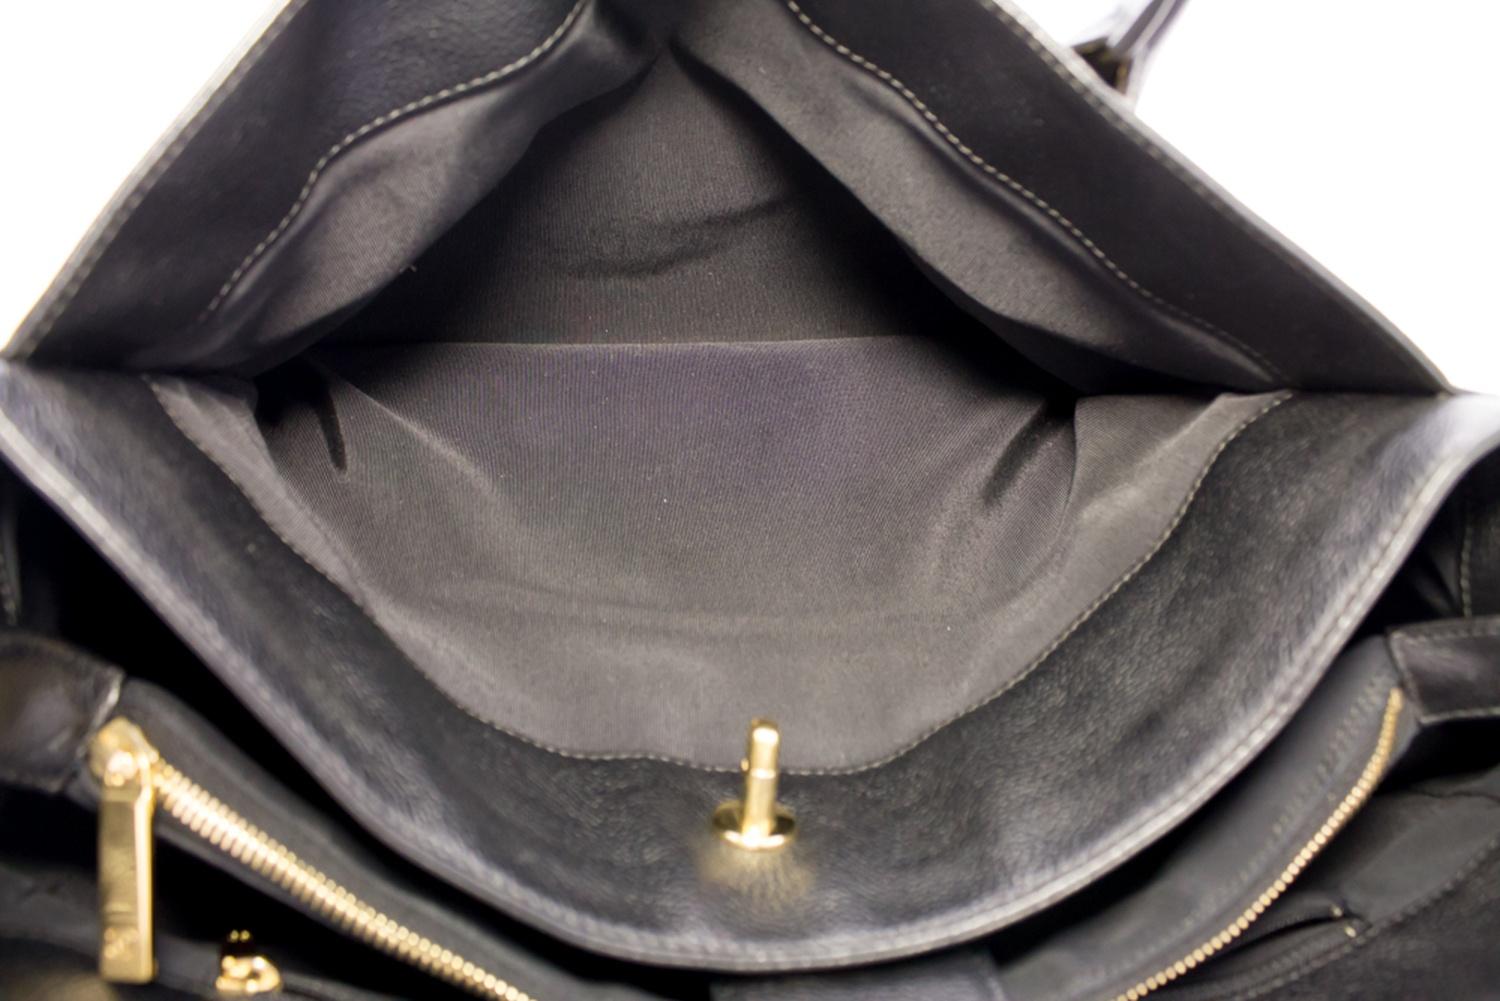 CHANEL Executive Tote Caviar Shoulder Bag Handbag Black Gold Strap 12